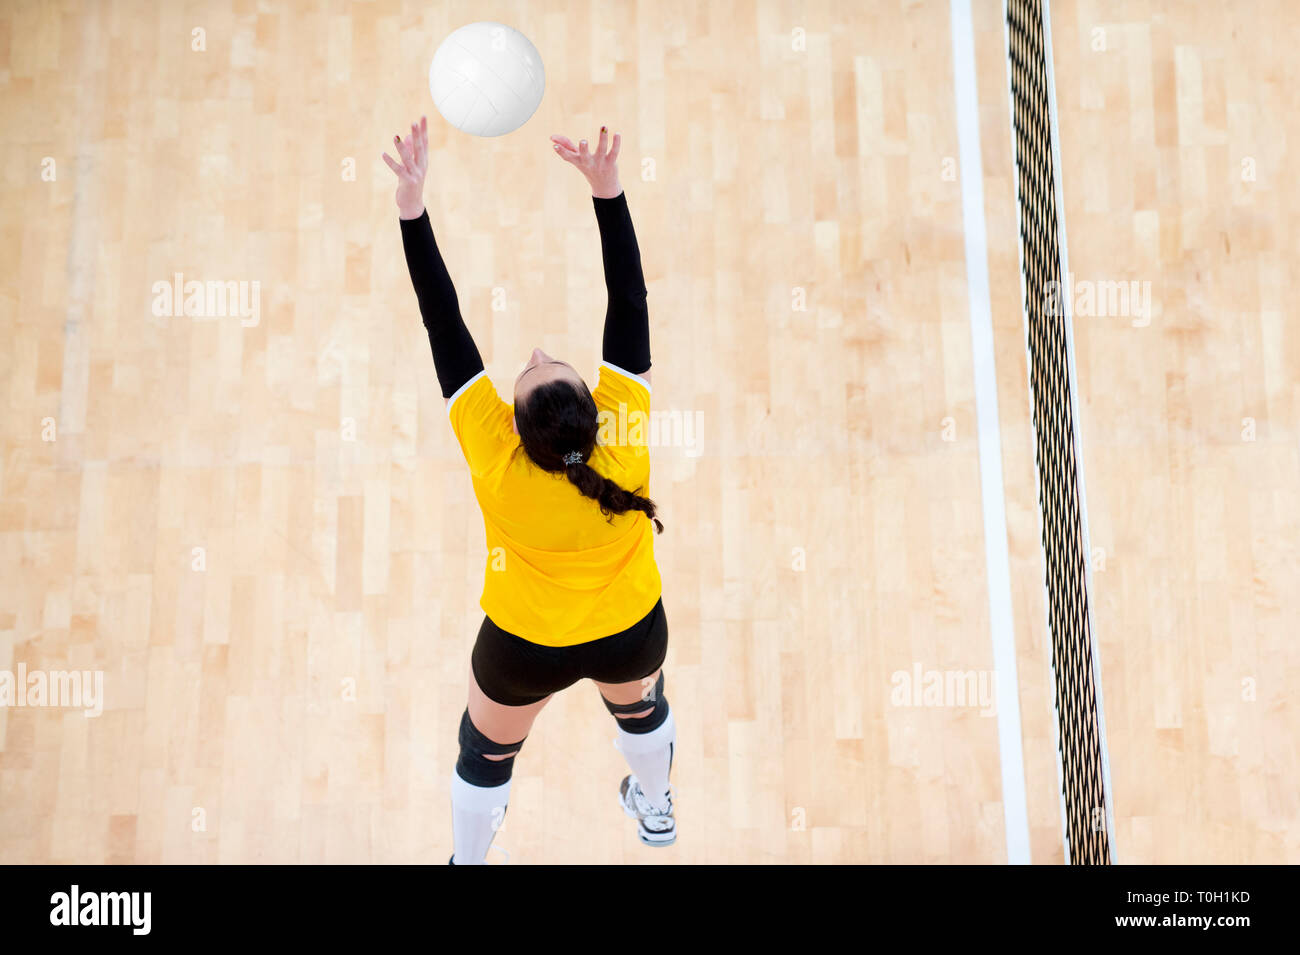 Pase de voleibol fotografías e imágenes de alta resolución - Alamy